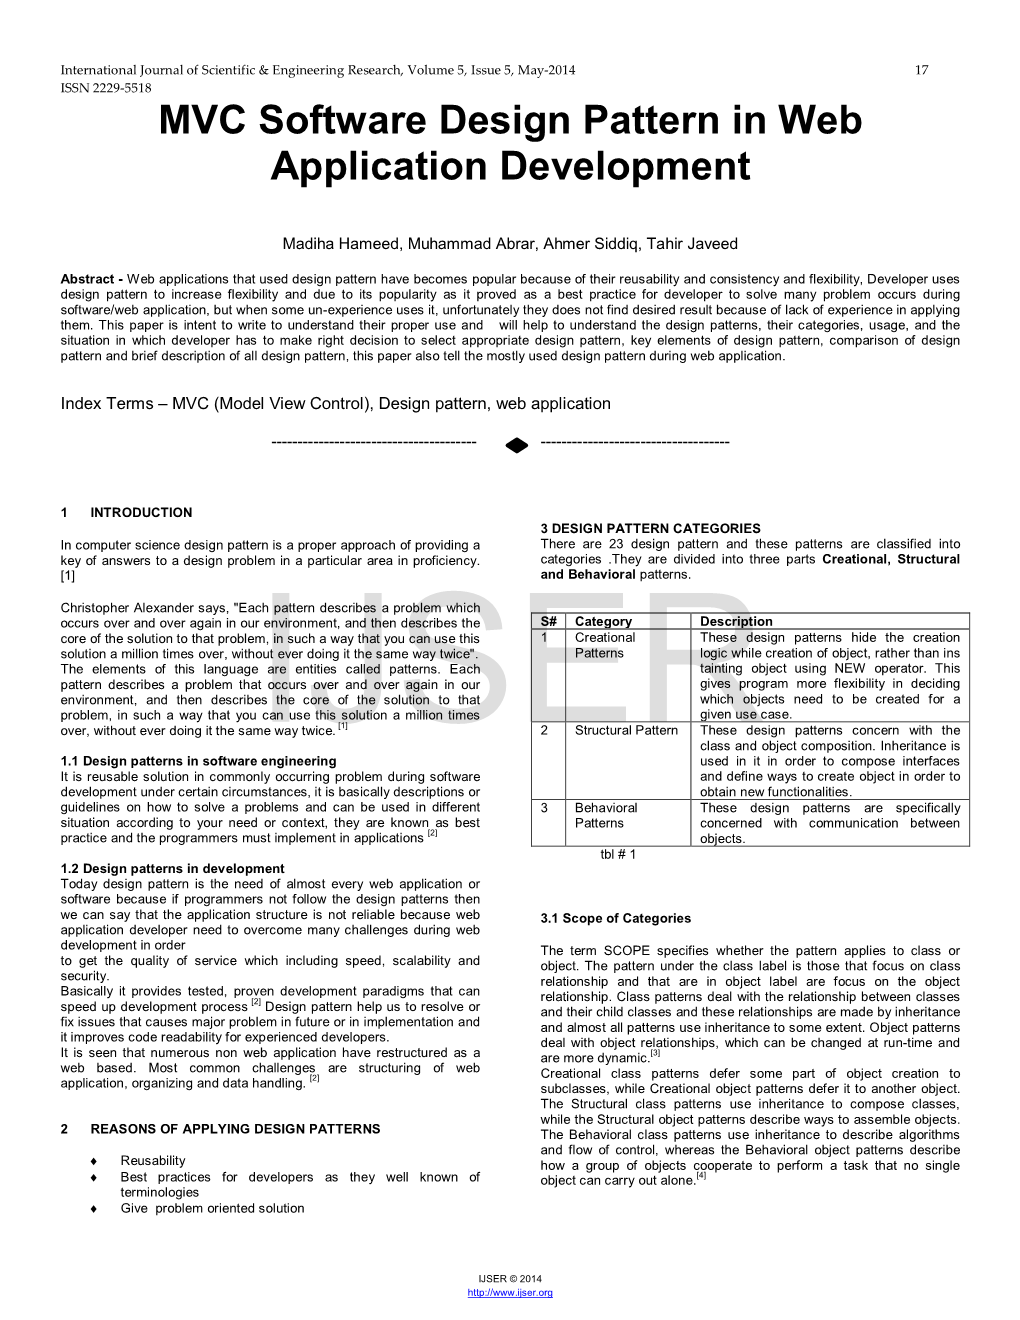 MVC Software Design Pattern in Web Application Development